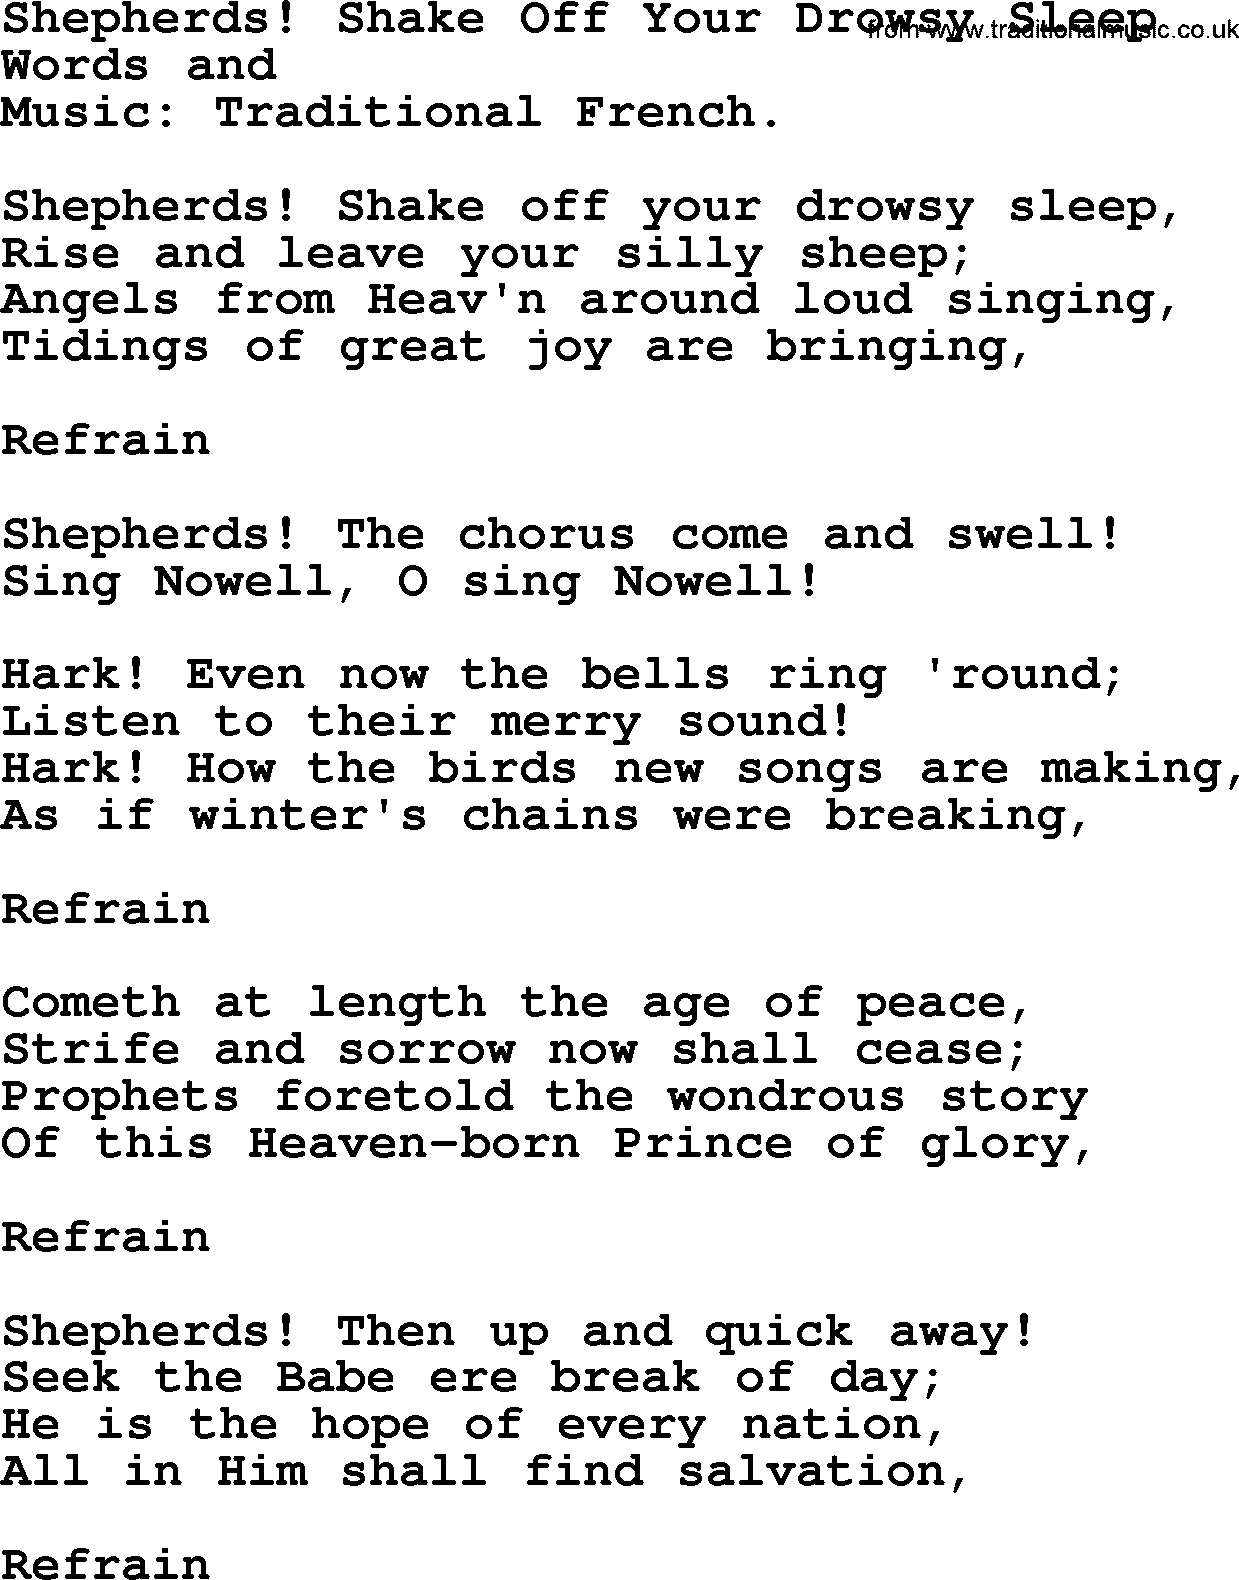 Christmas Hymns, Carols and Songs, title: Shepherds! Shake Off Your Drowsy Sleep, lyrics with PDF